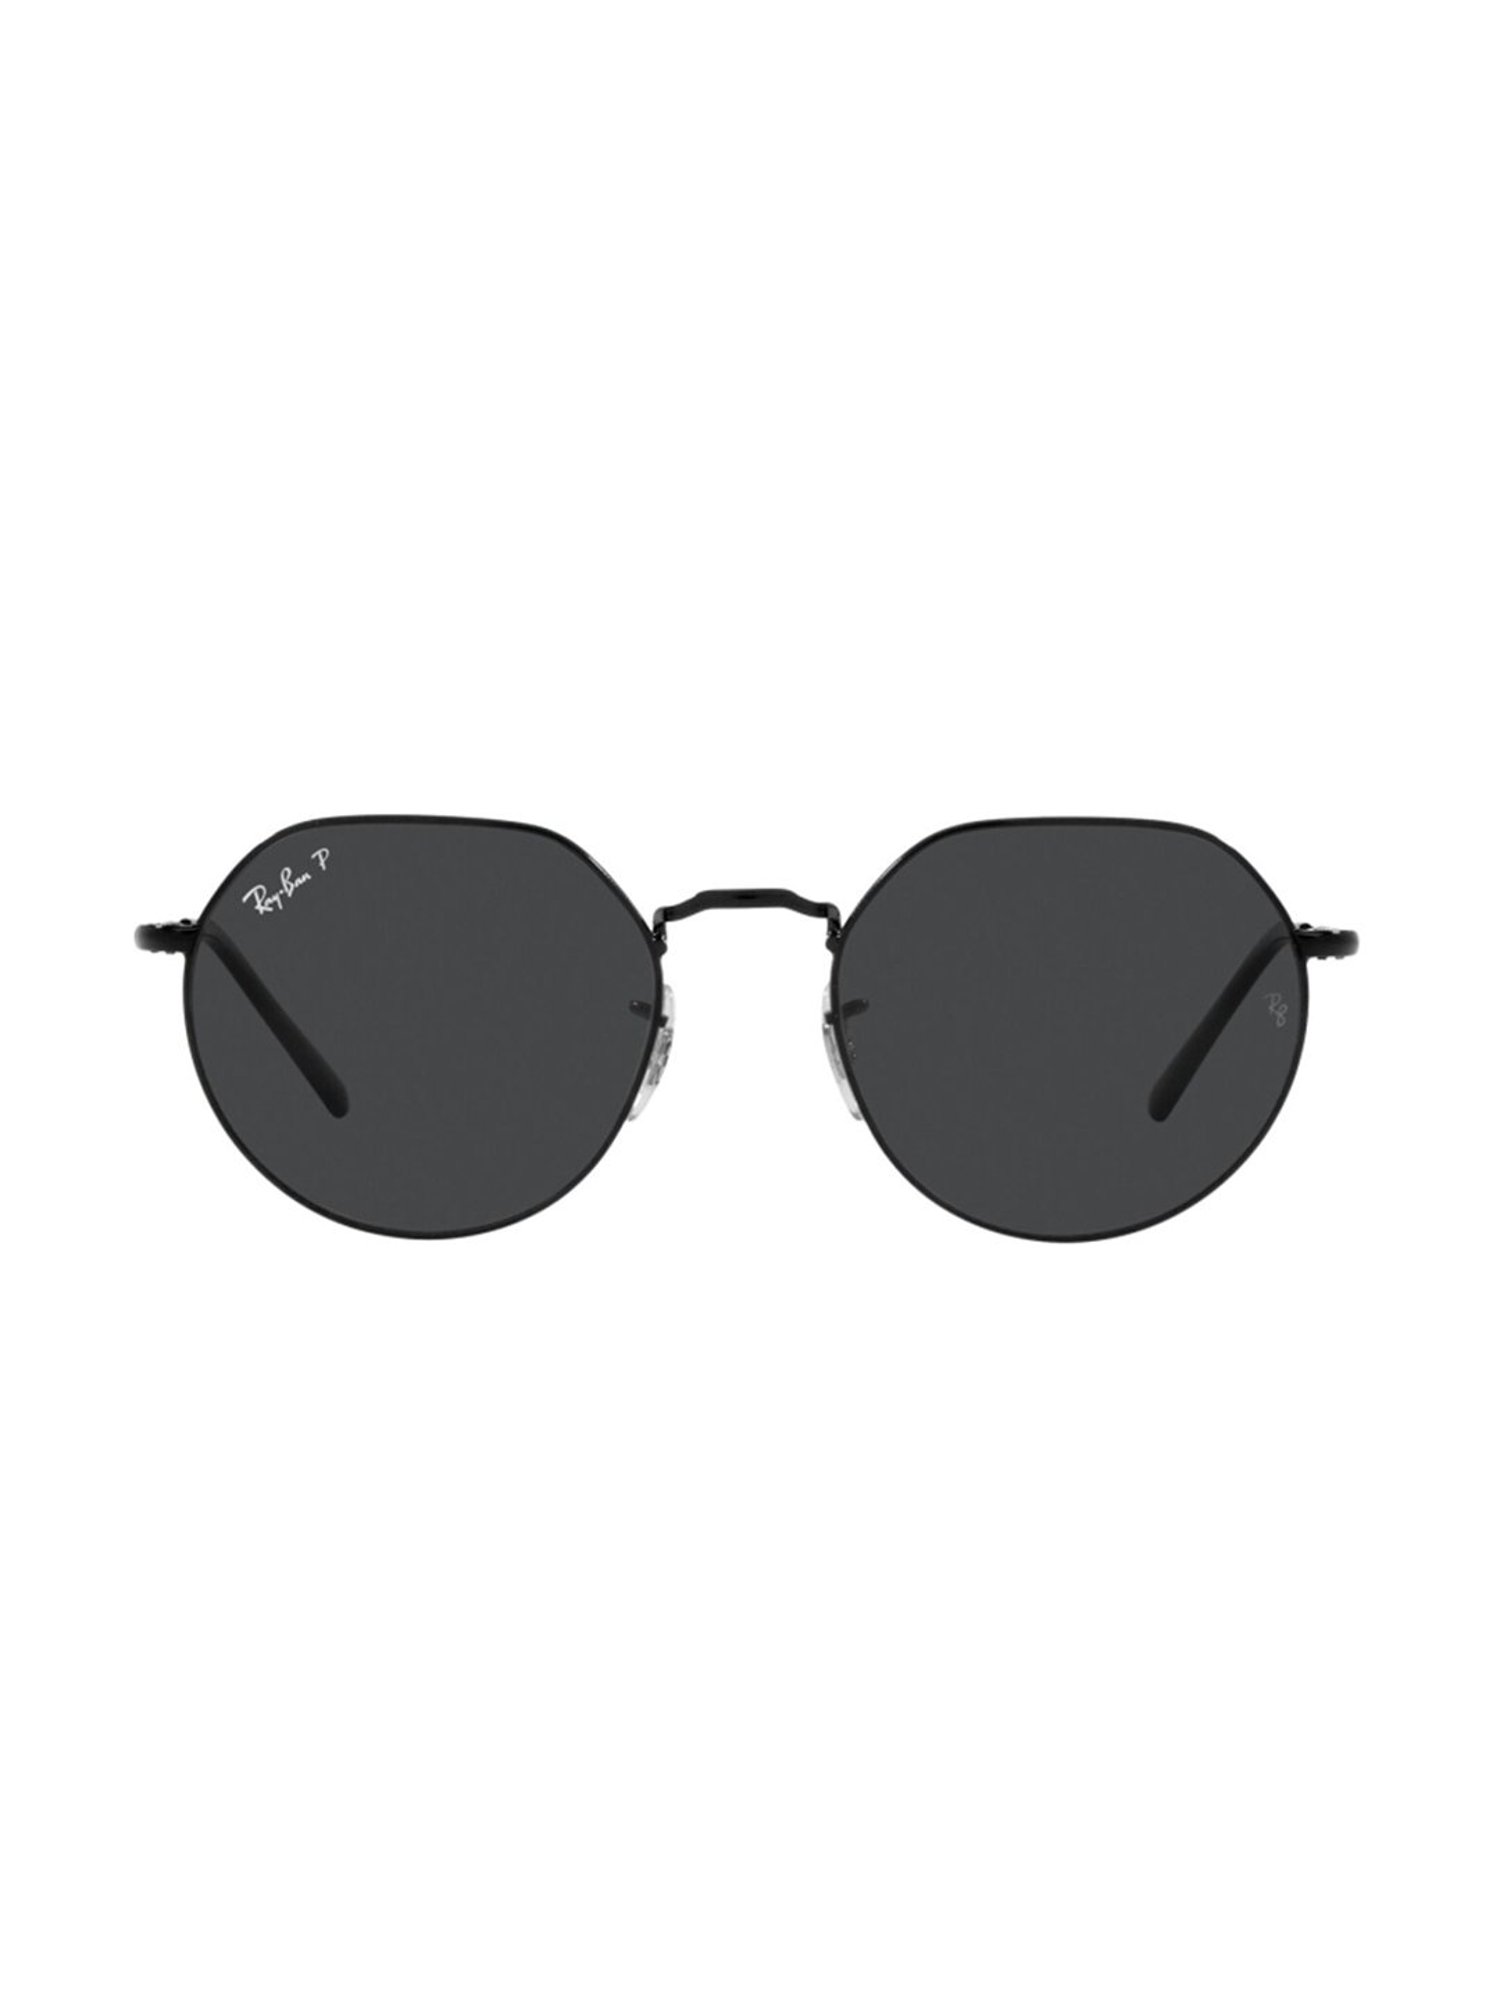 Buy Purple Sunglasses for Men by Ray-Ban Online | Ajio.com